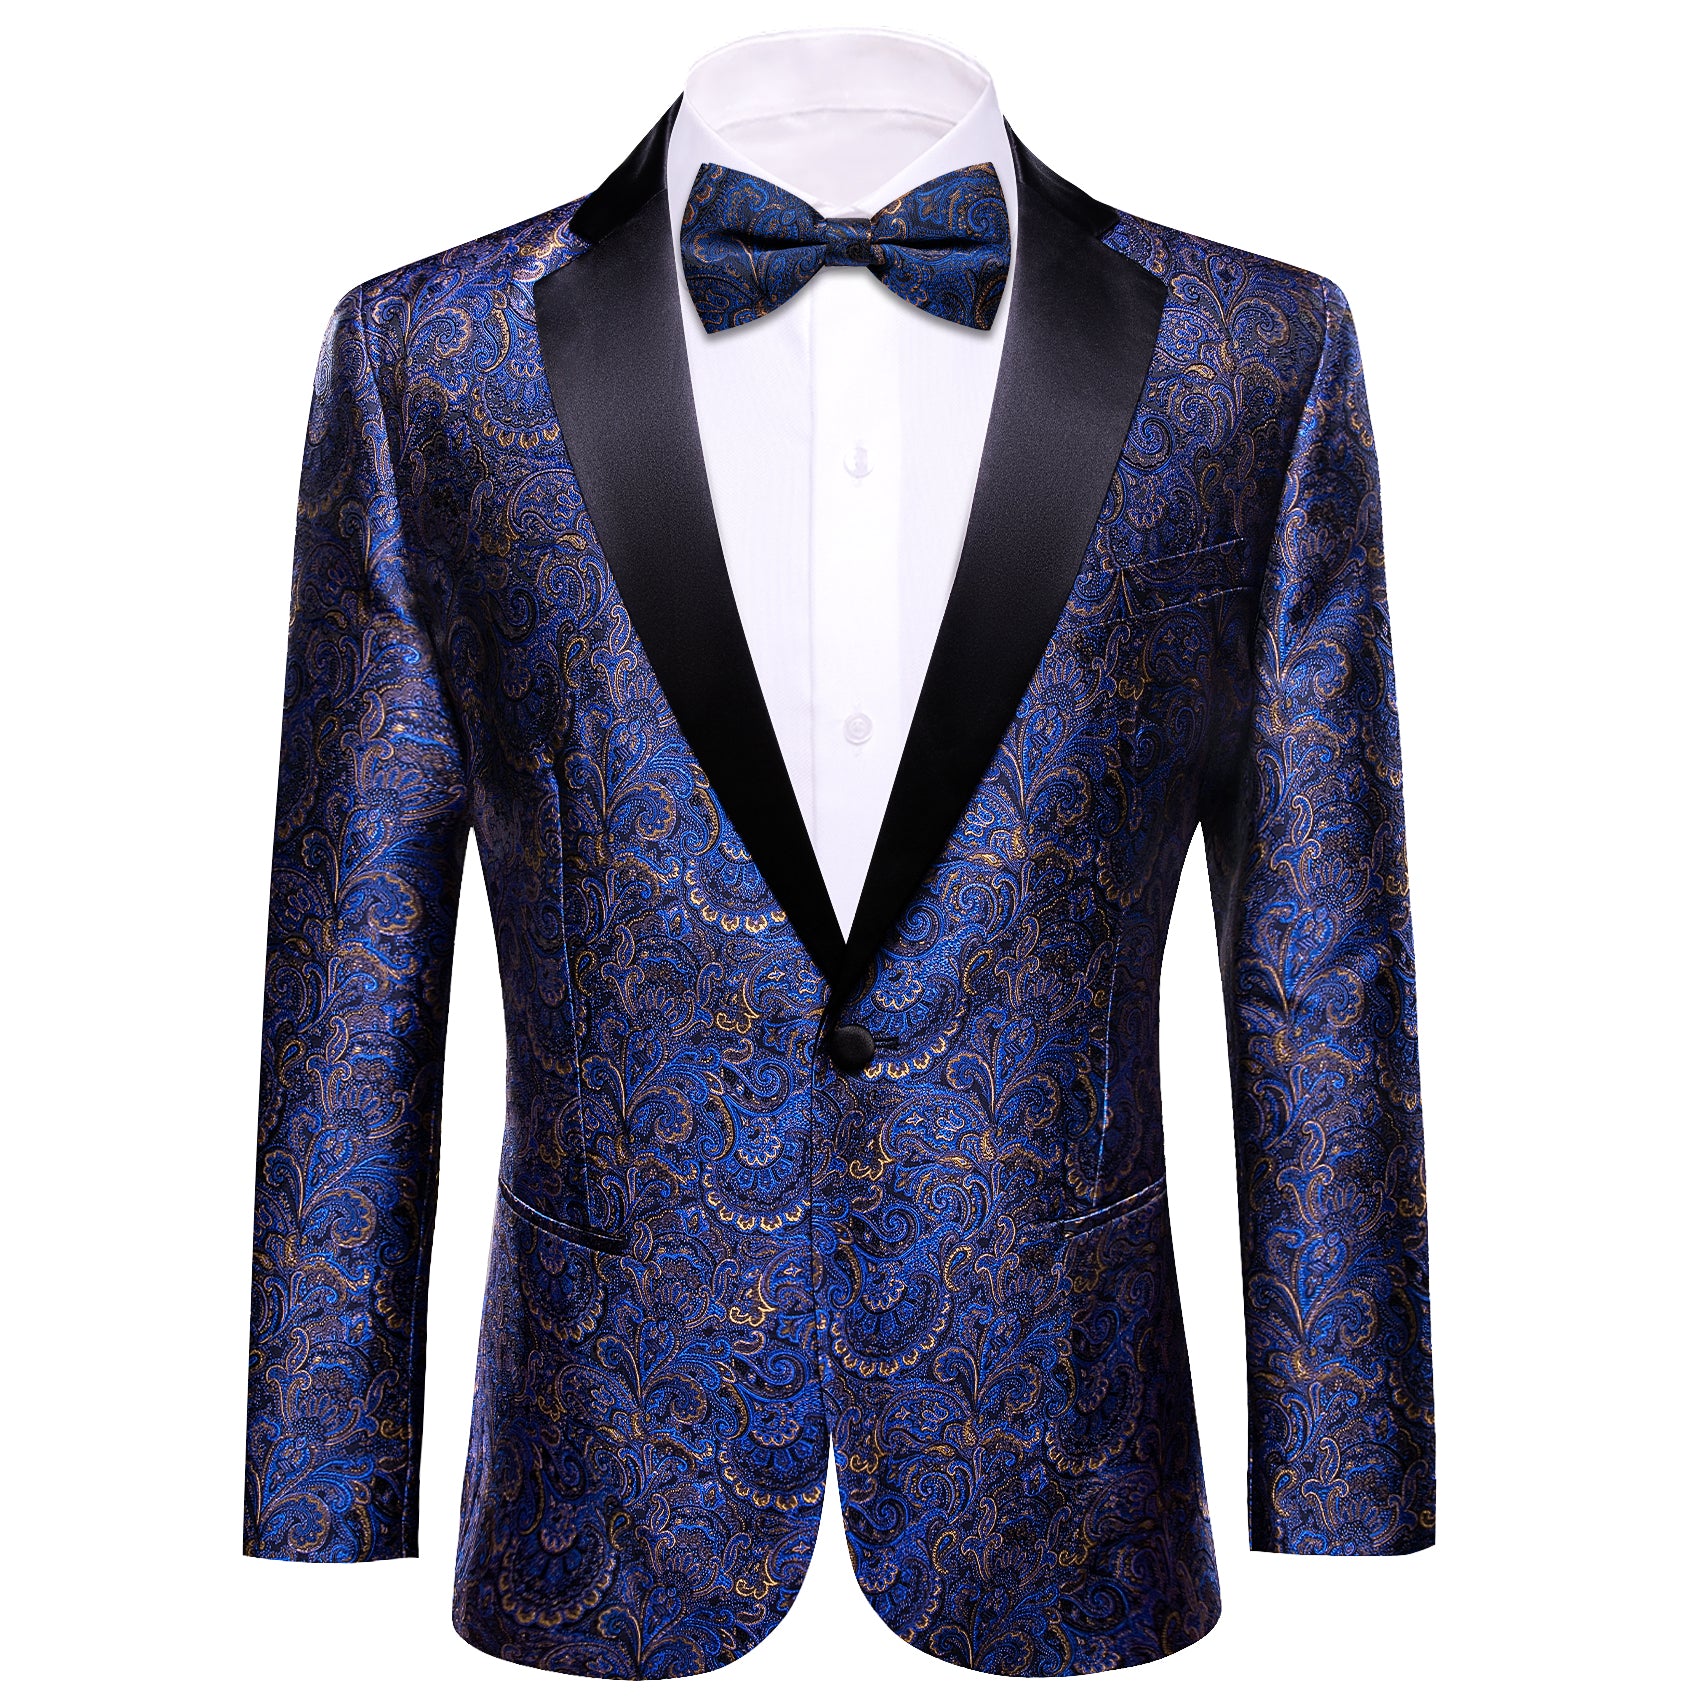 Men's Dress Blue Paisley Suit Jacket Slim One Button Stylish Blazer